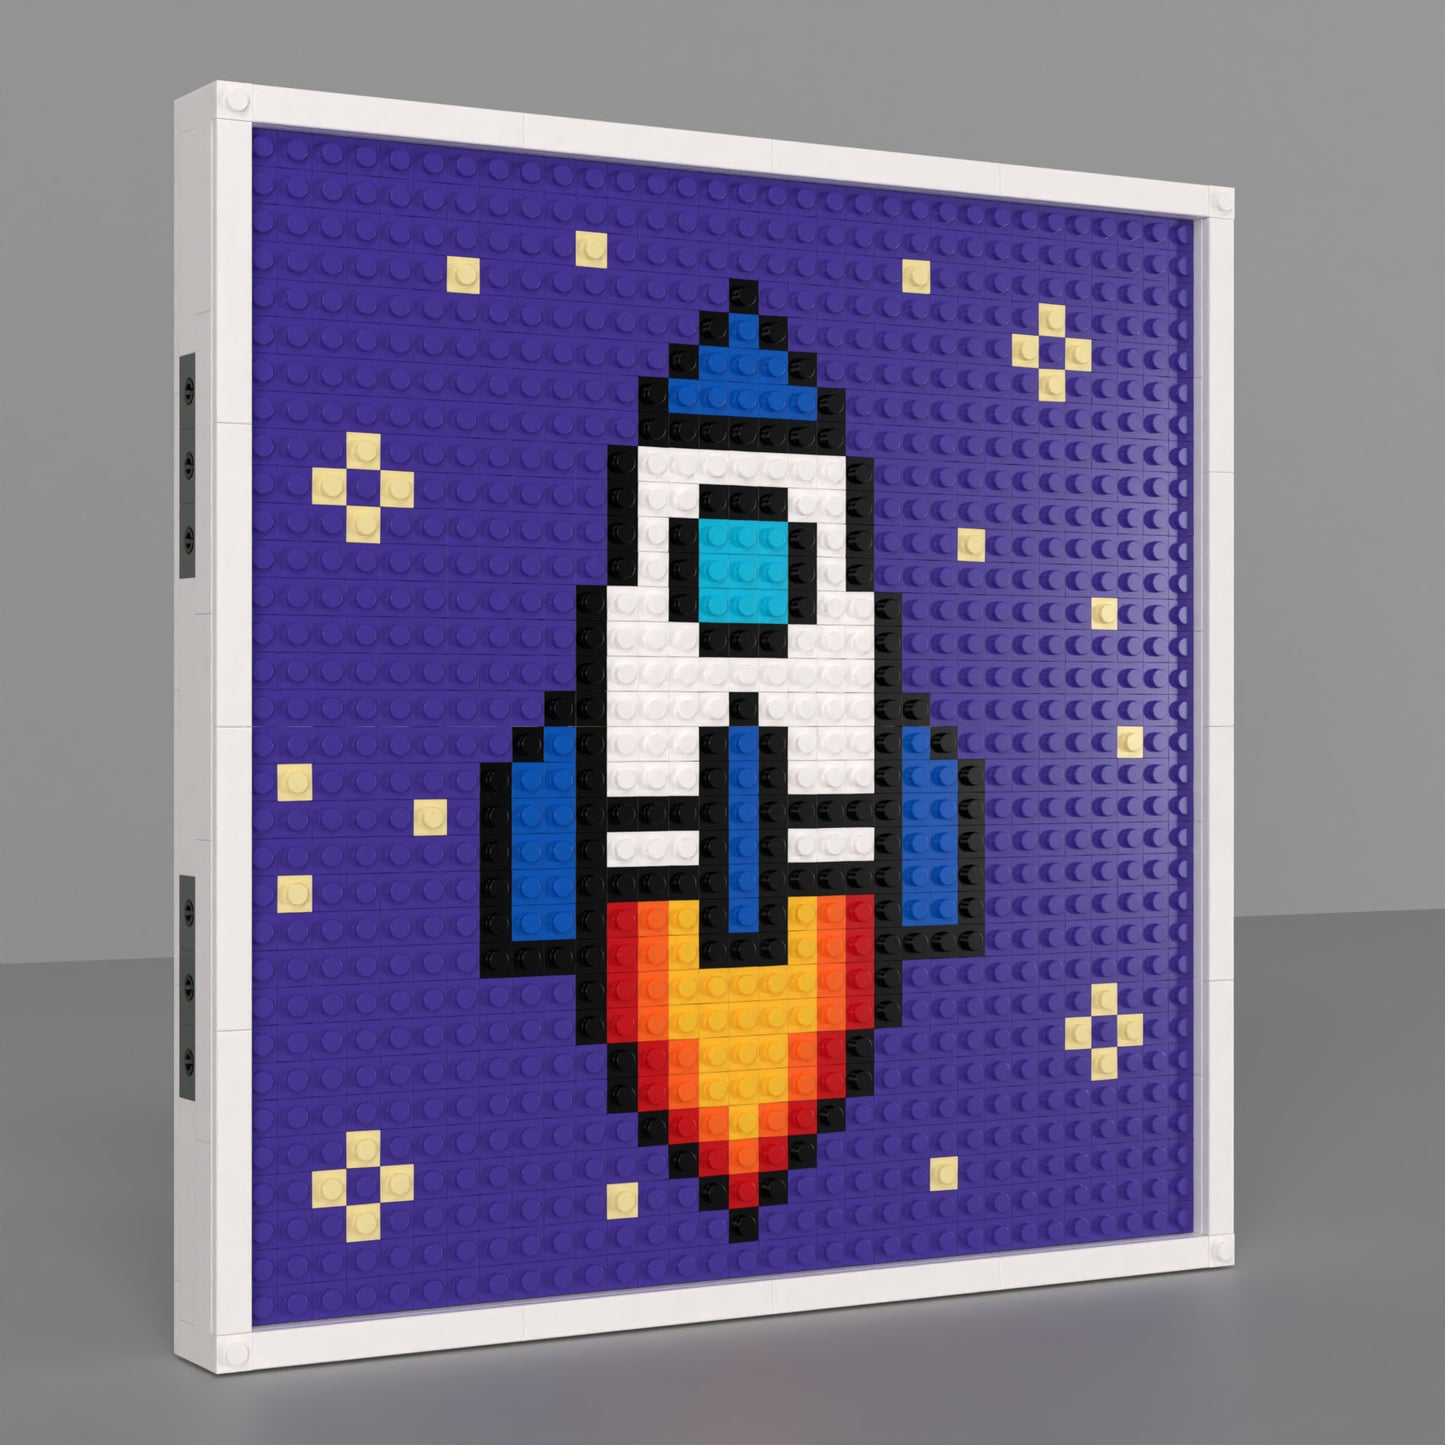 32*32 Compatible Lego Pieces Rocket Pixel Art, High Resolution Rocket Pattern